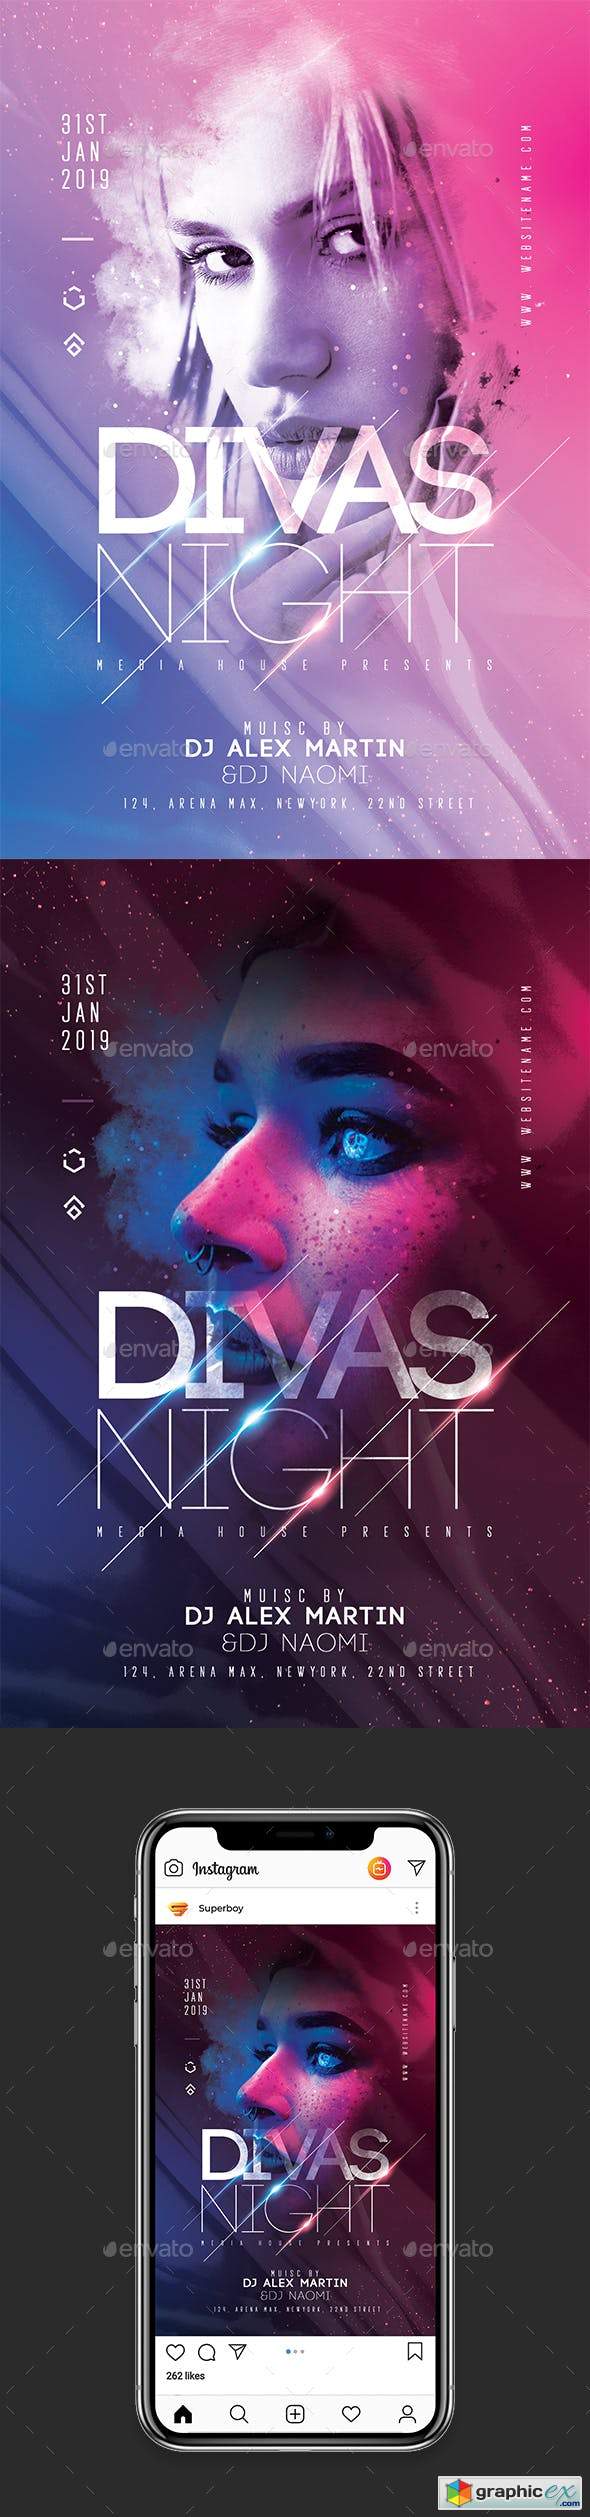 Divas Night Party Flyer